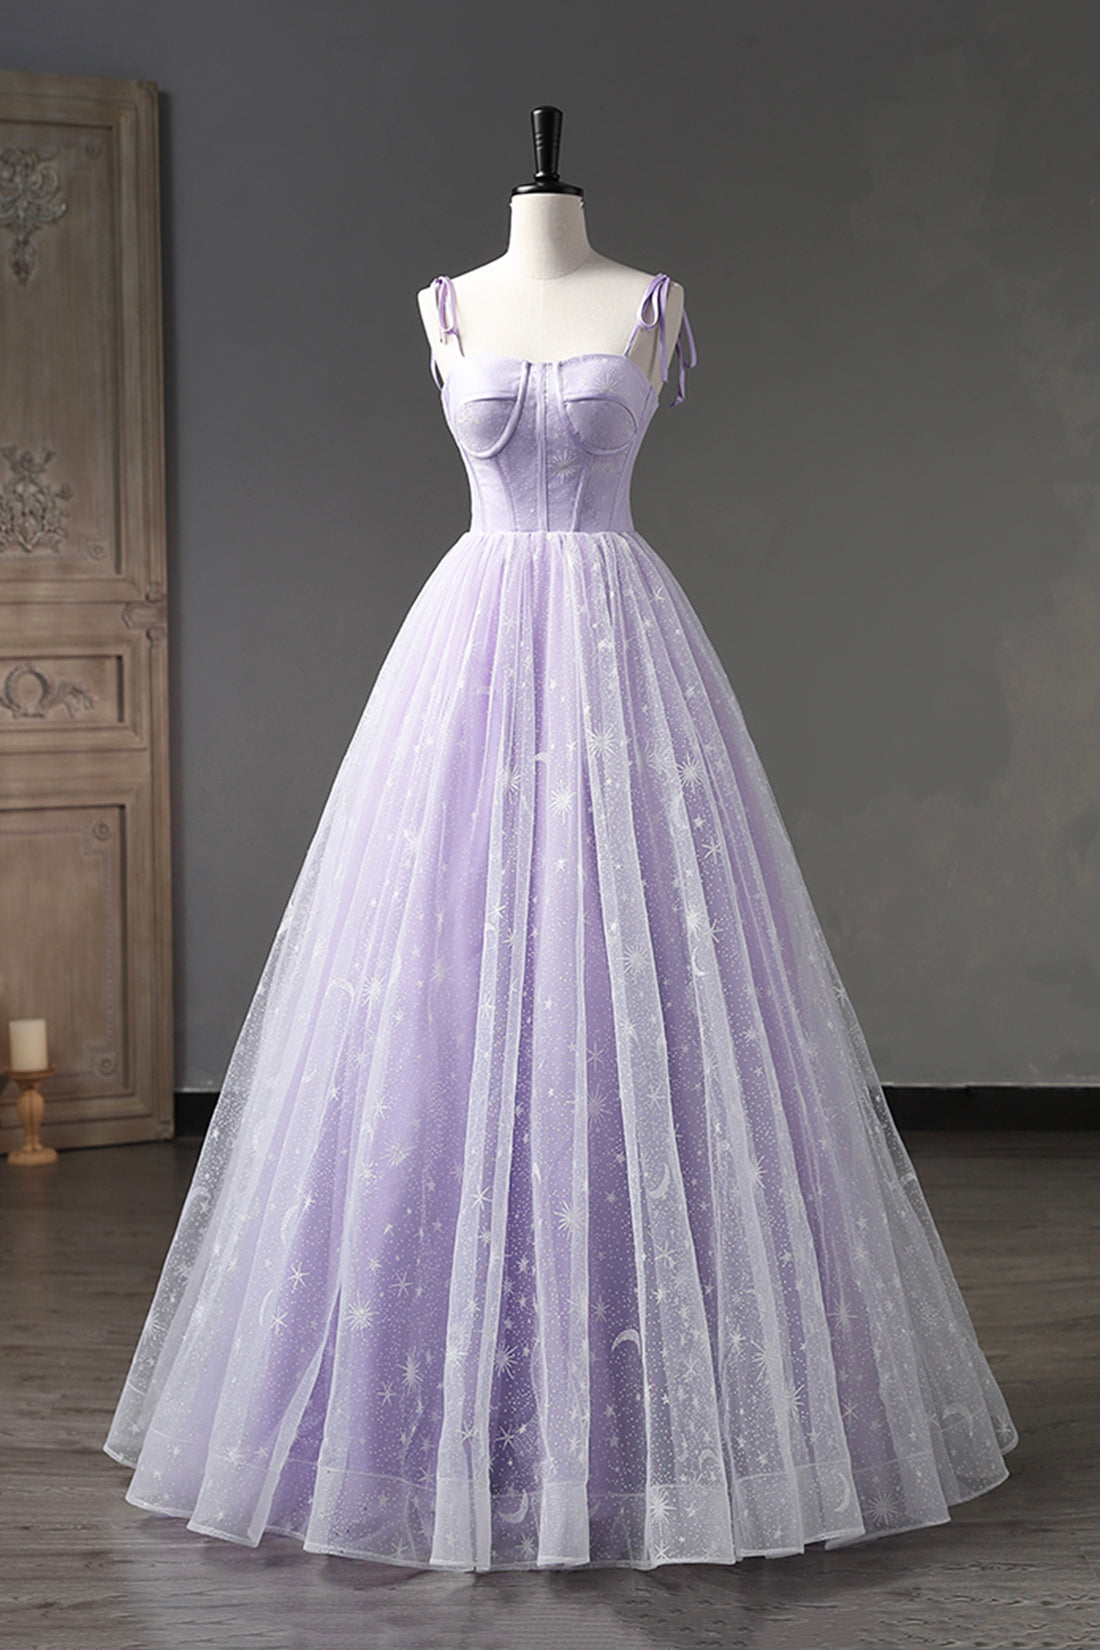 Lavender Tulle Straps Floor Length Evening Dress Outfits For Girls, Lavender A-Line Prom Dress